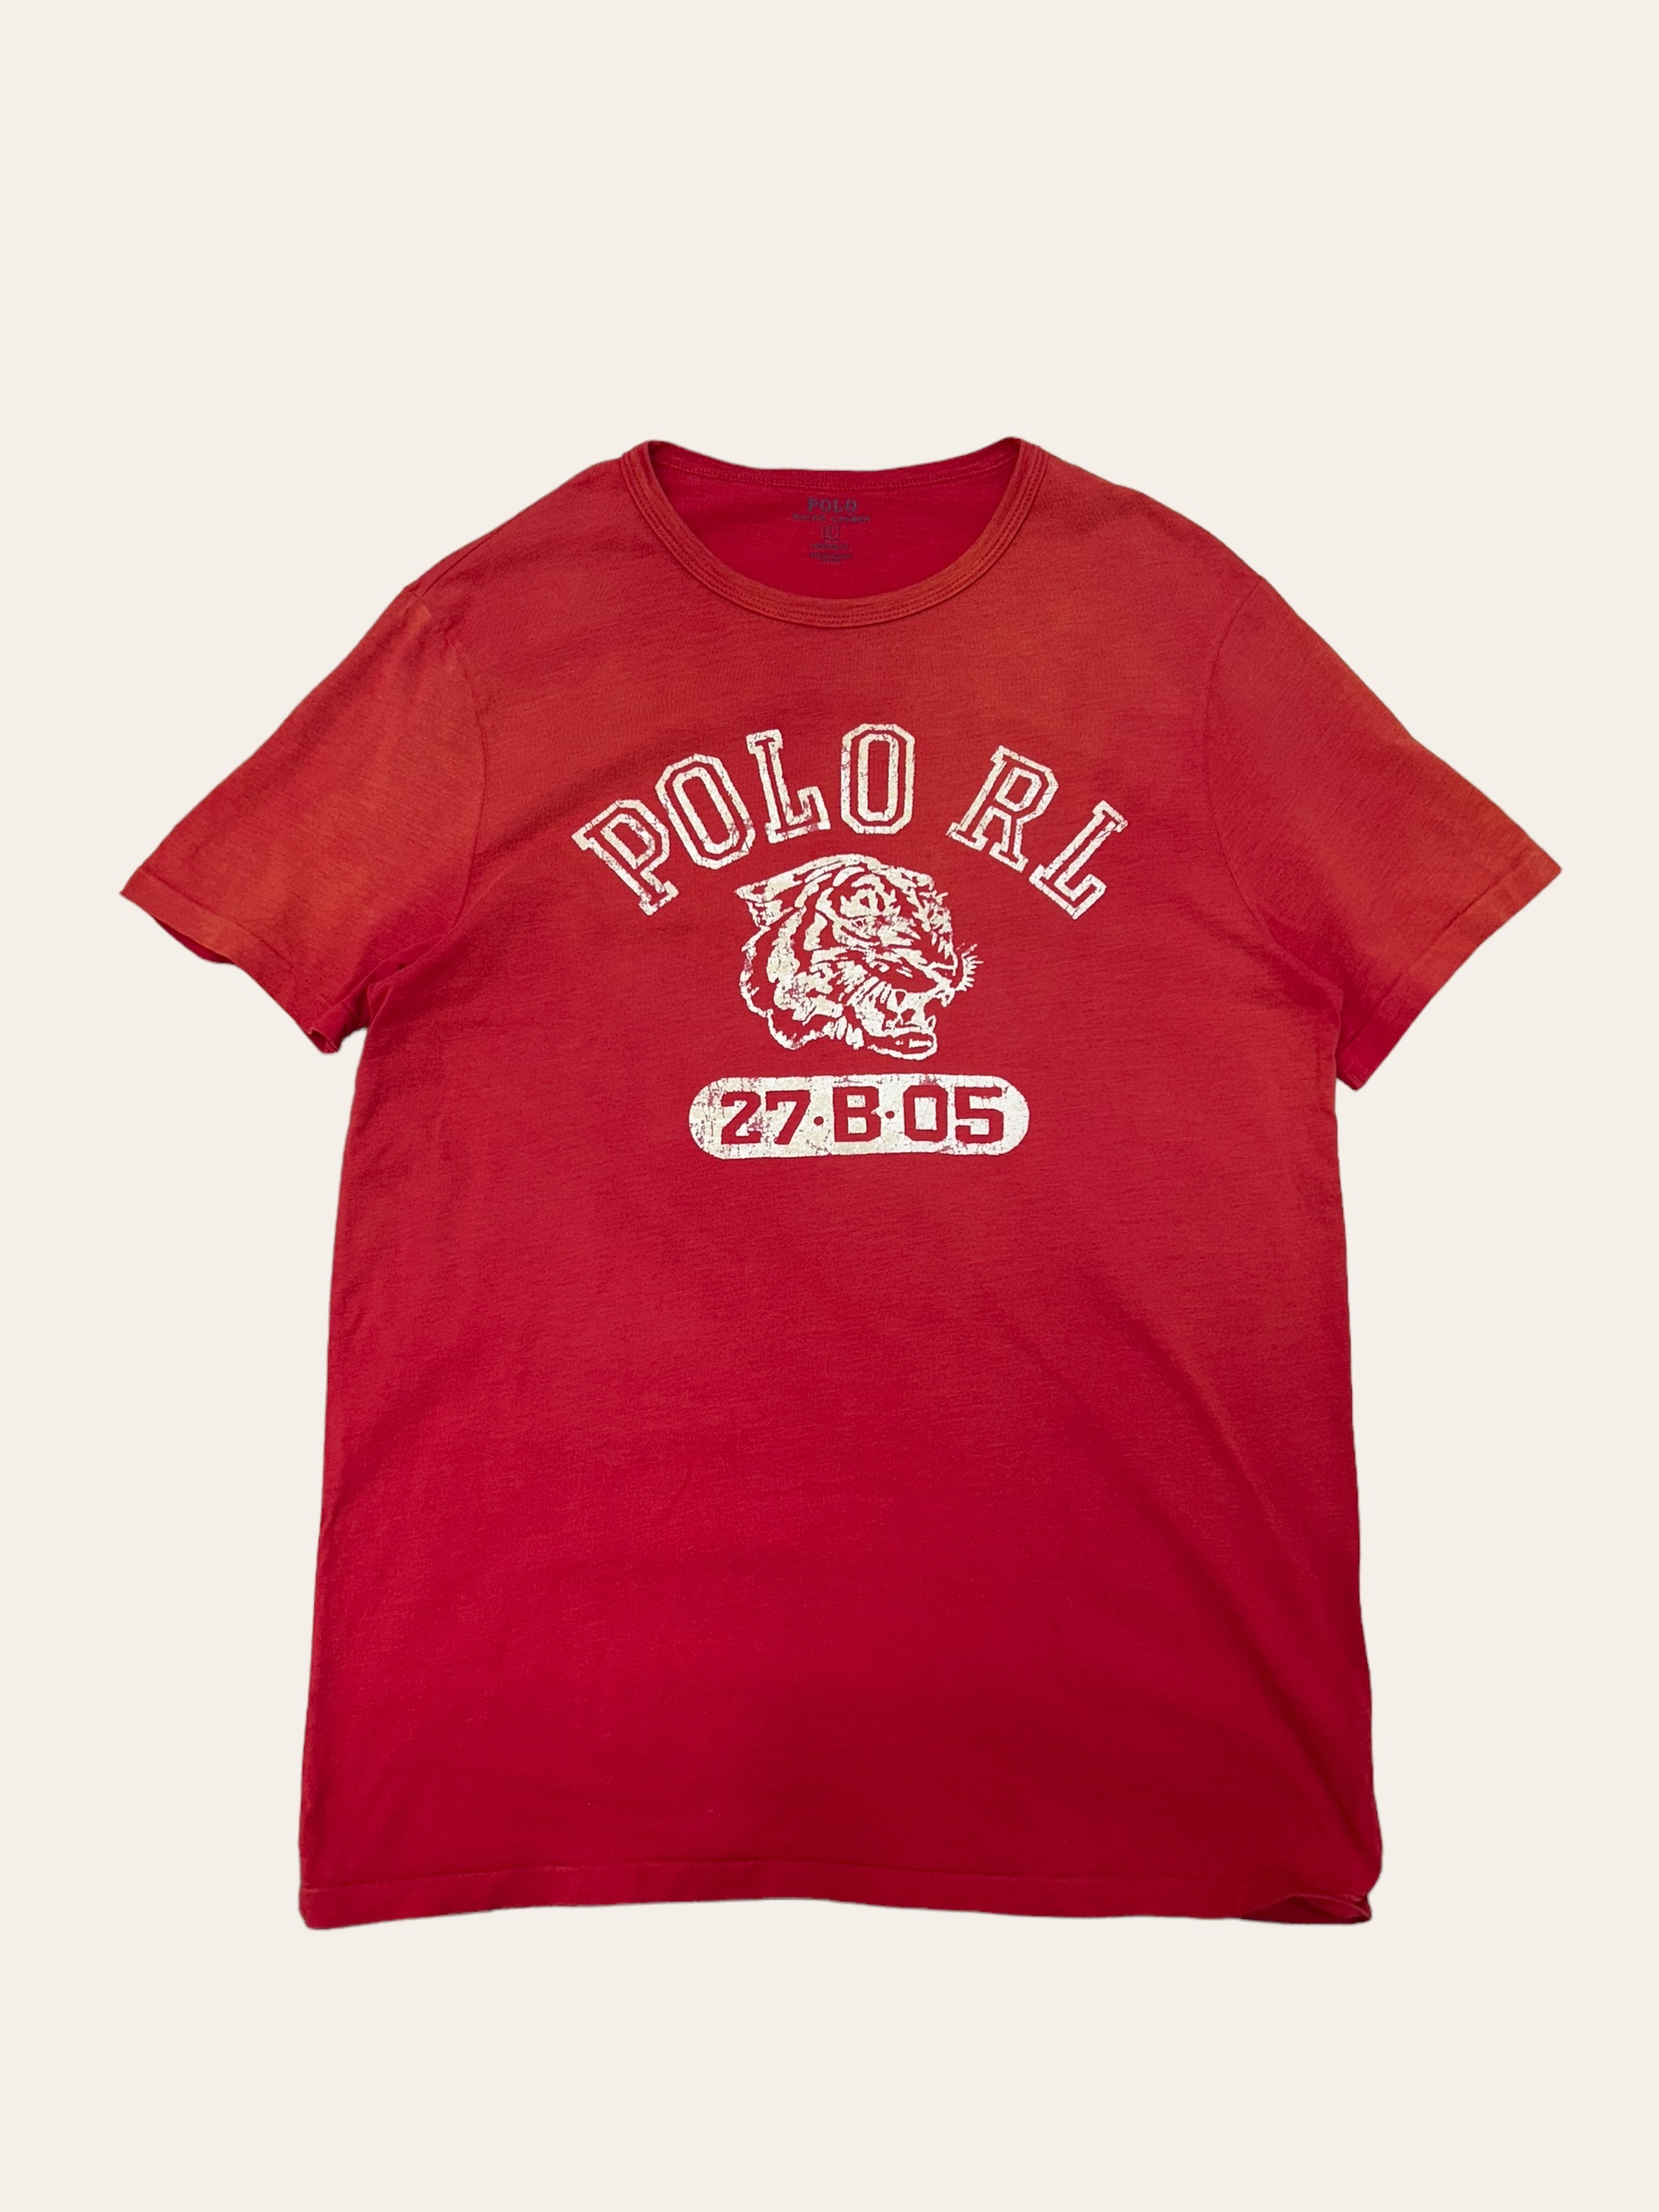 Polo ralph lauren red tiger printing T-shirt L